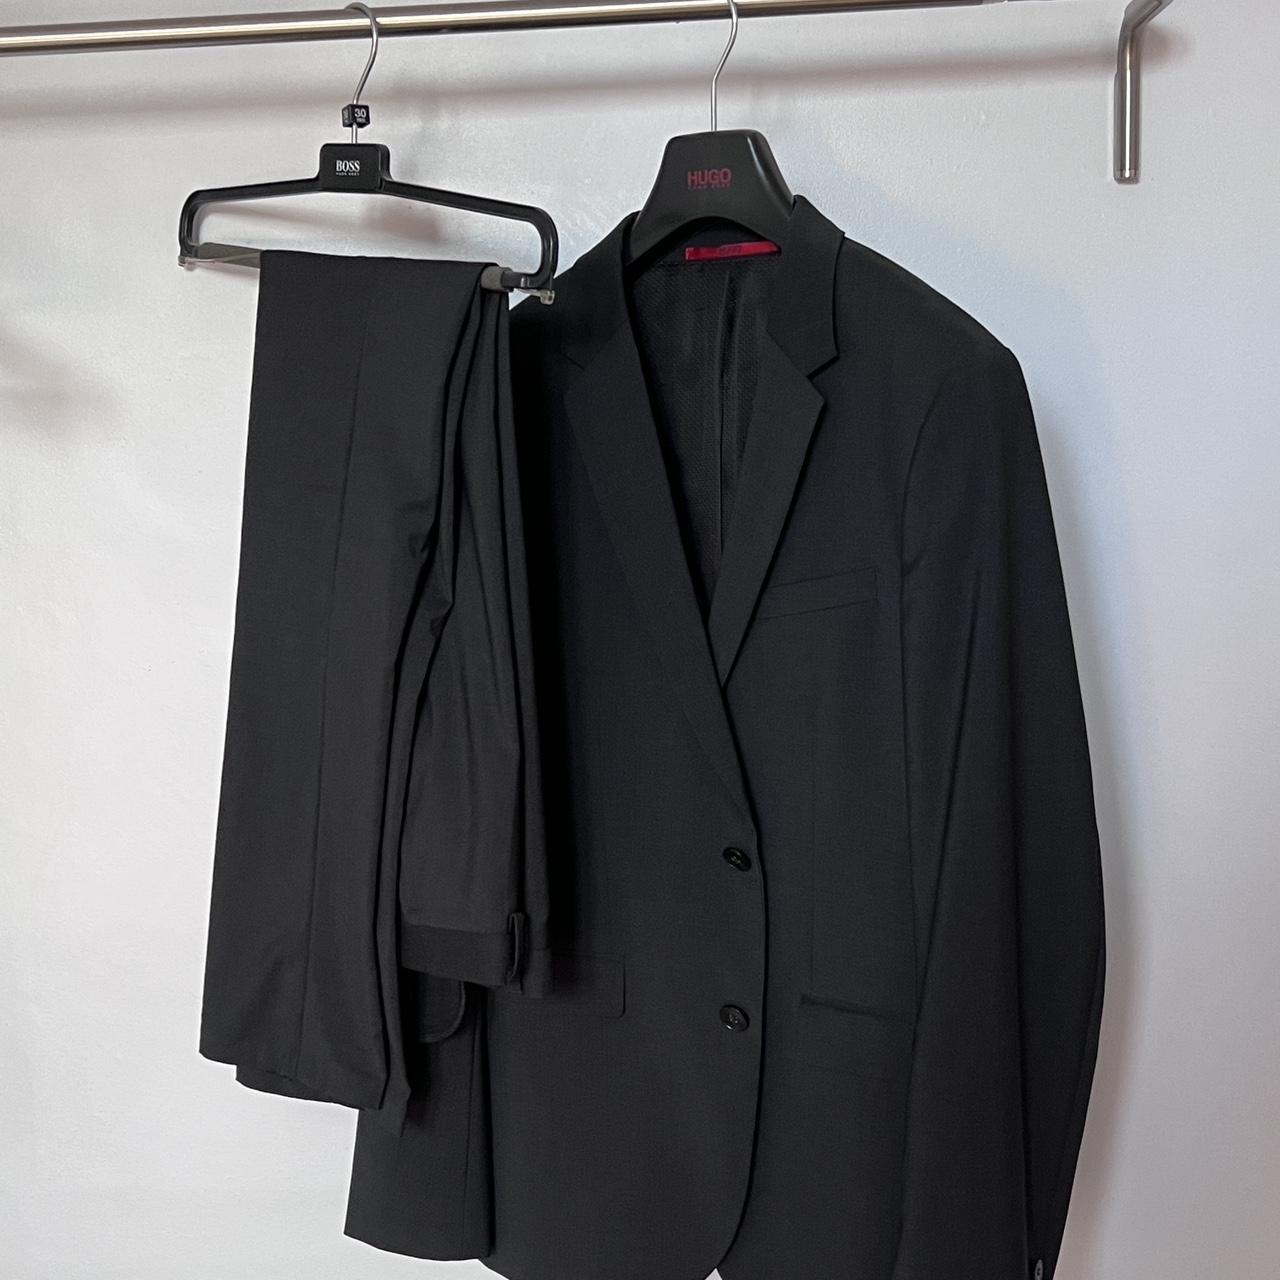 Hugo Boss Grey Suit Jacket - 48/38R Trousers -... - Depop